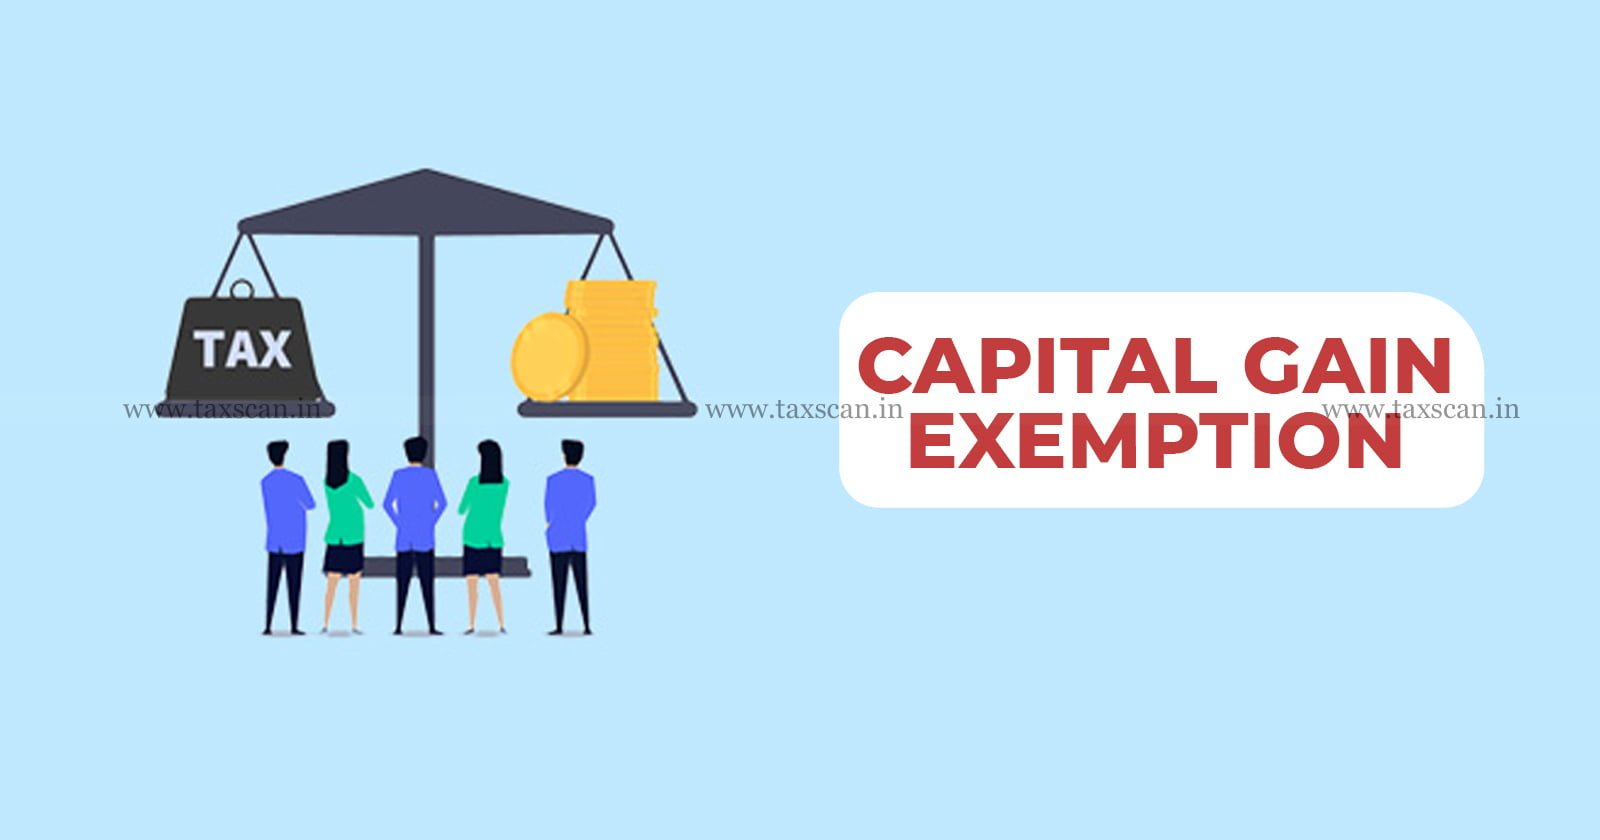 Capital Gain Exemption - Income Tax Return - ITAT - Income Tax - Capital Gain - taxscan